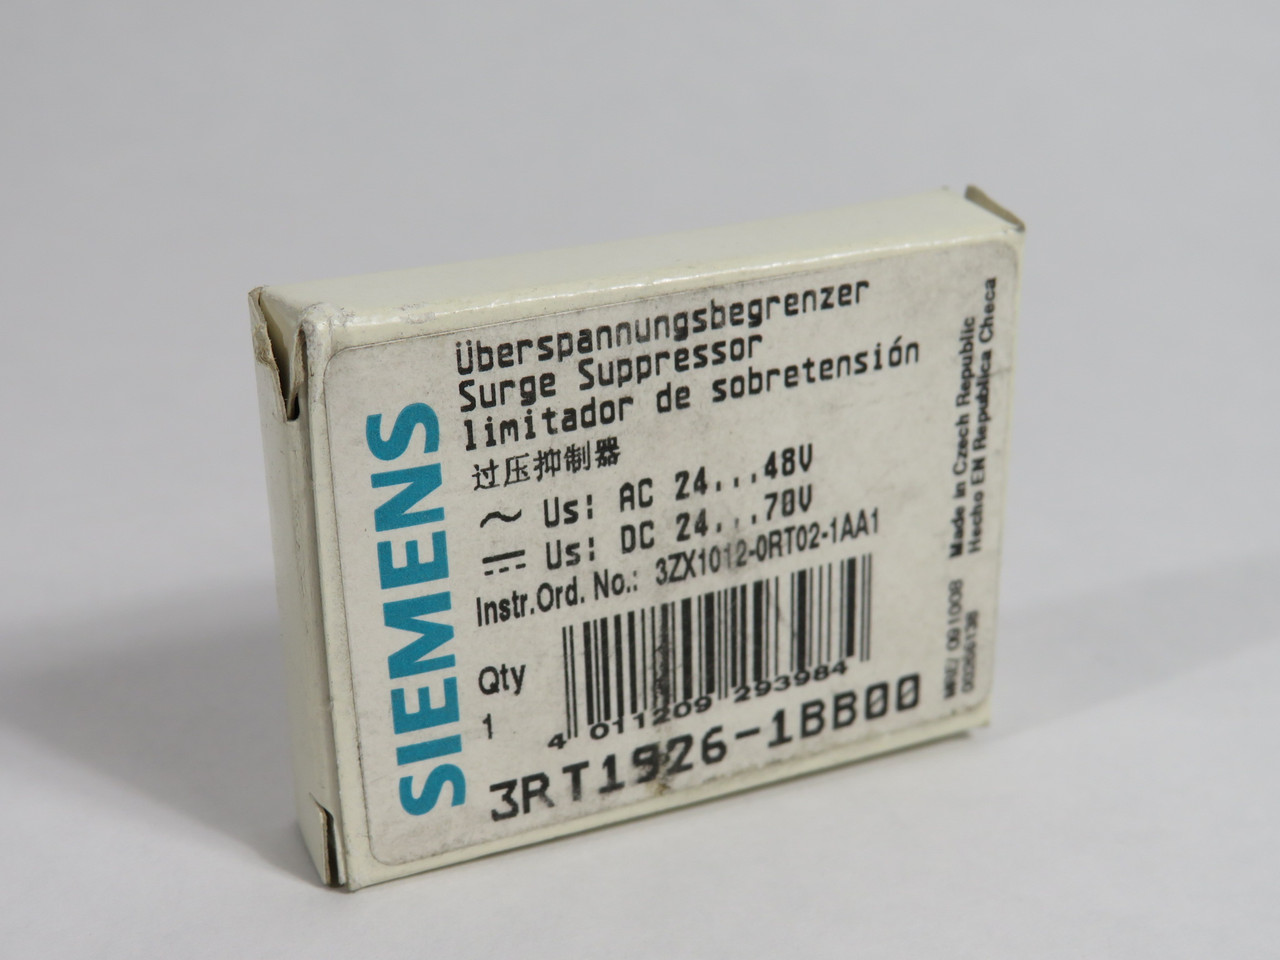 Siemens 3RT1926-1BB00 Surge Suppressor 24-48VAC 24-70VDC NEW